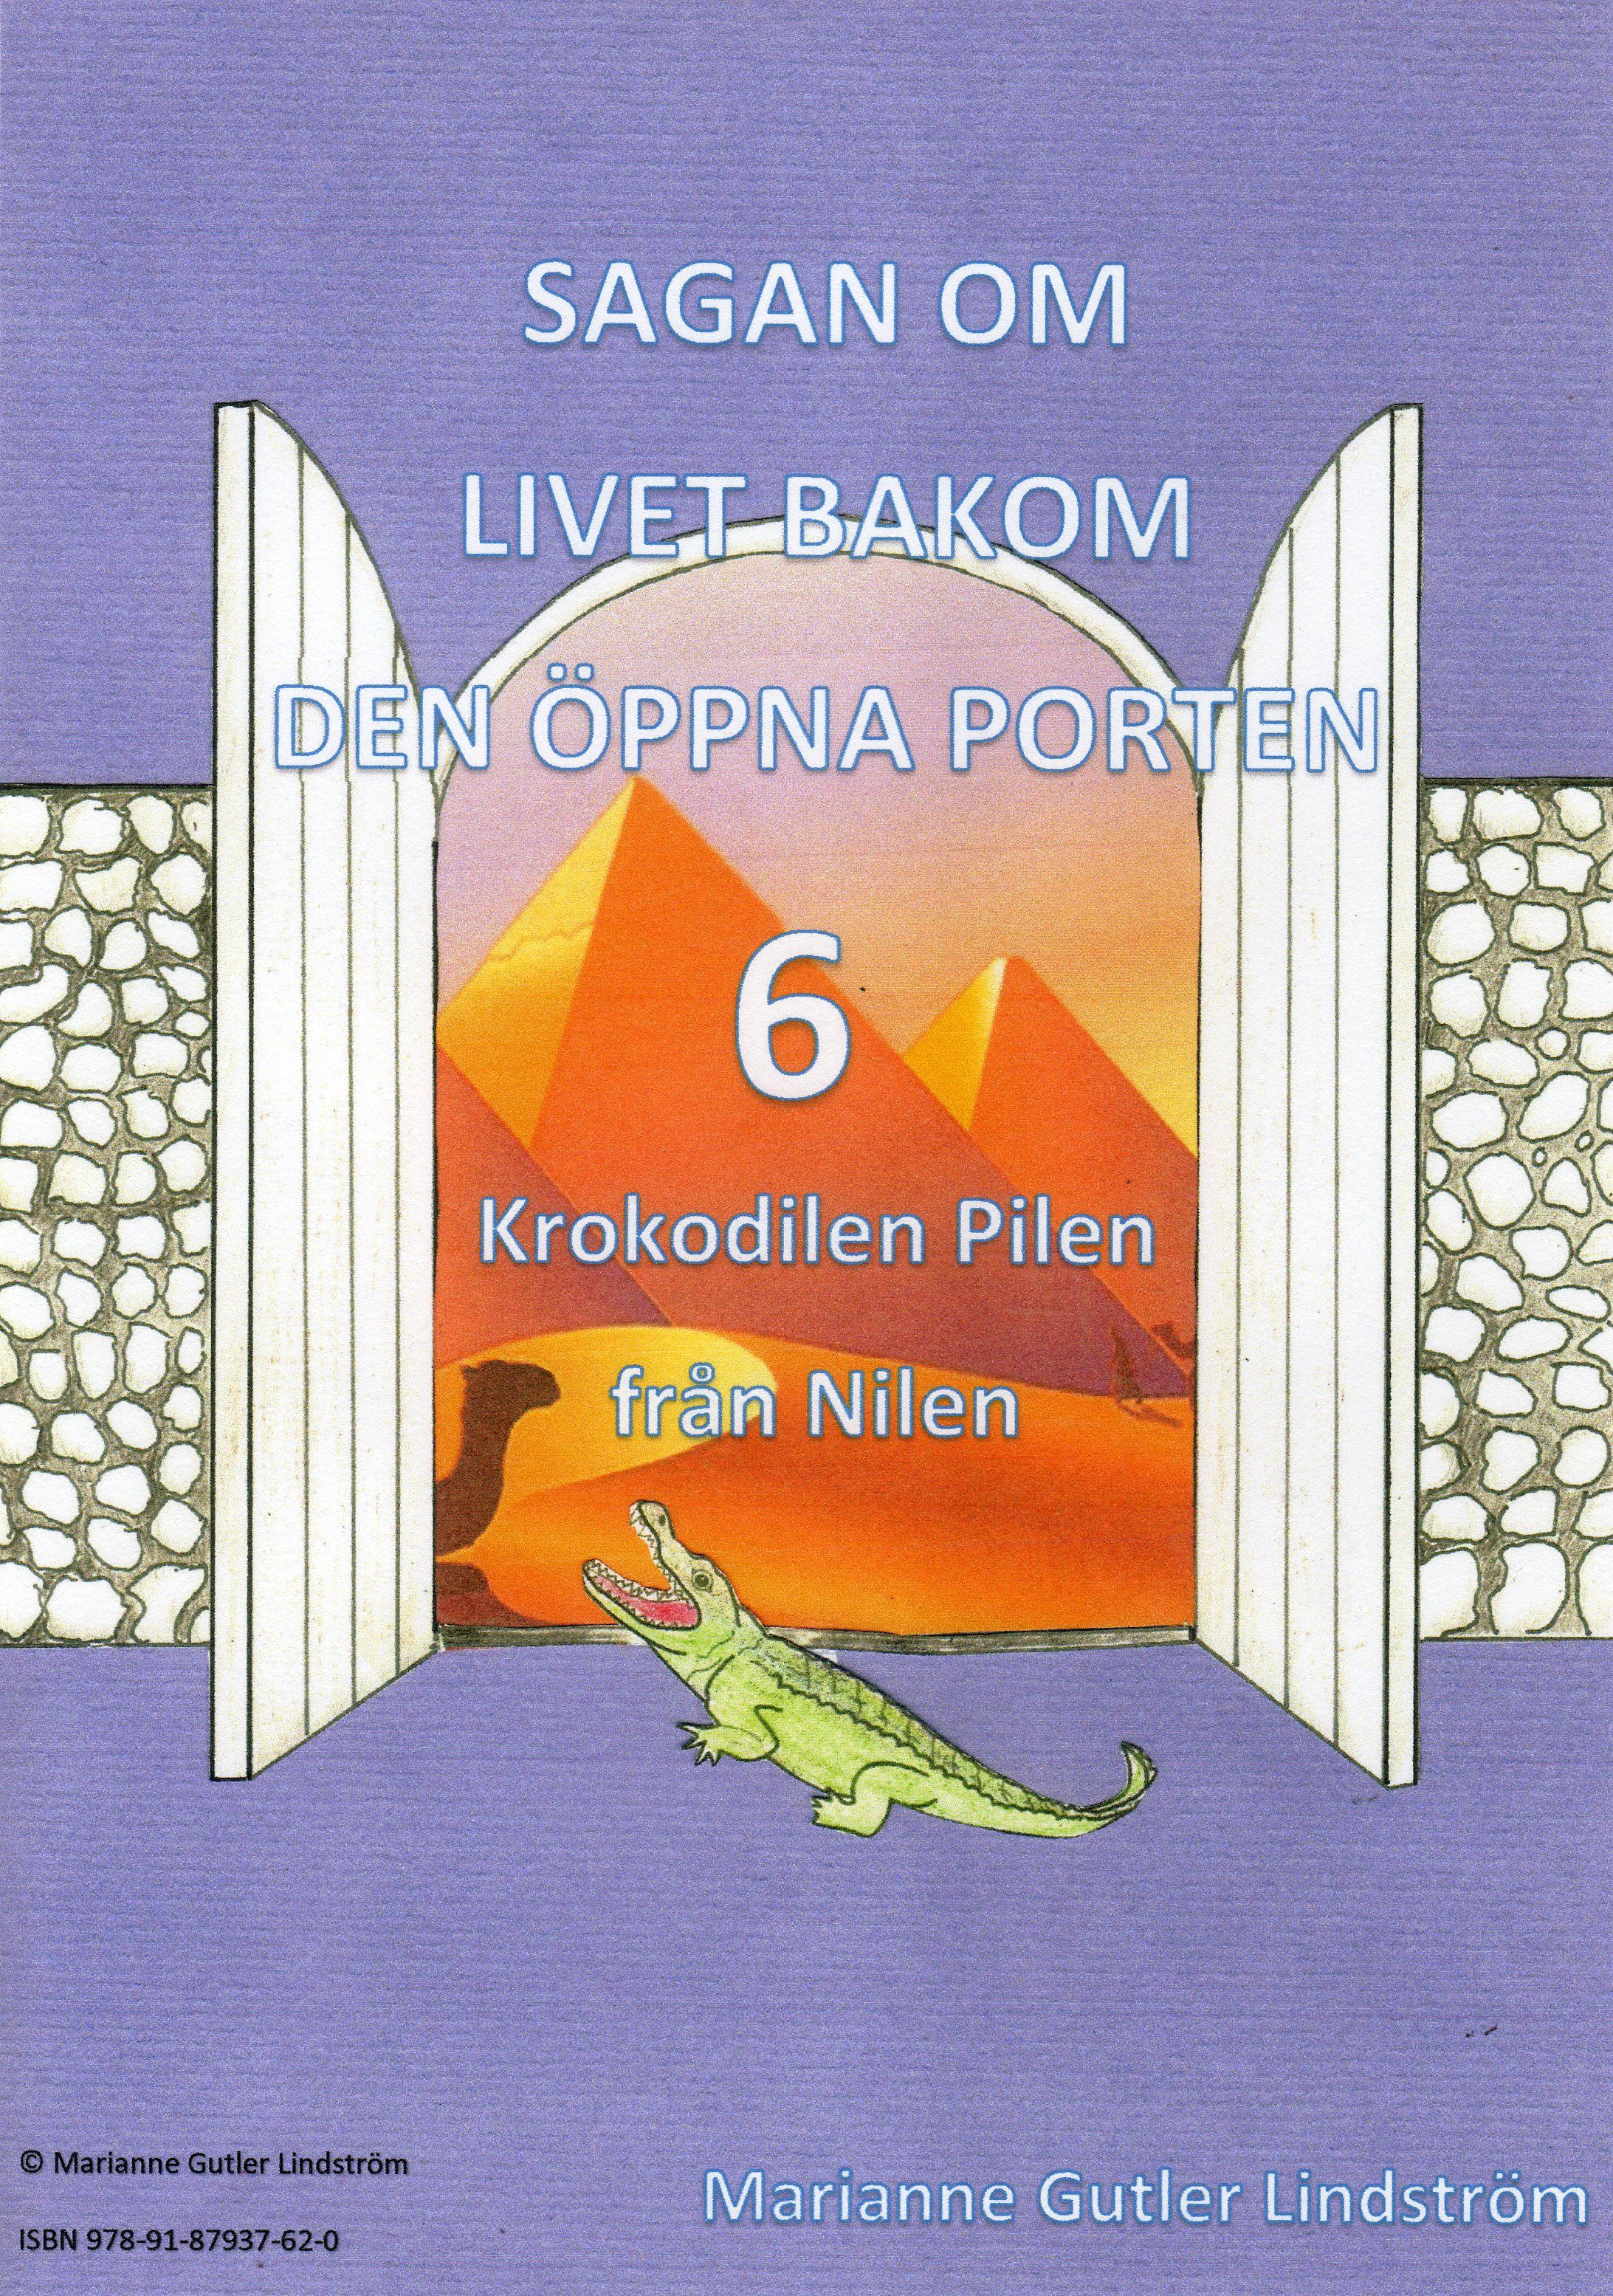 Krokodilen Pilen från Nilen, e-bog af Marianne Gutler Lindström